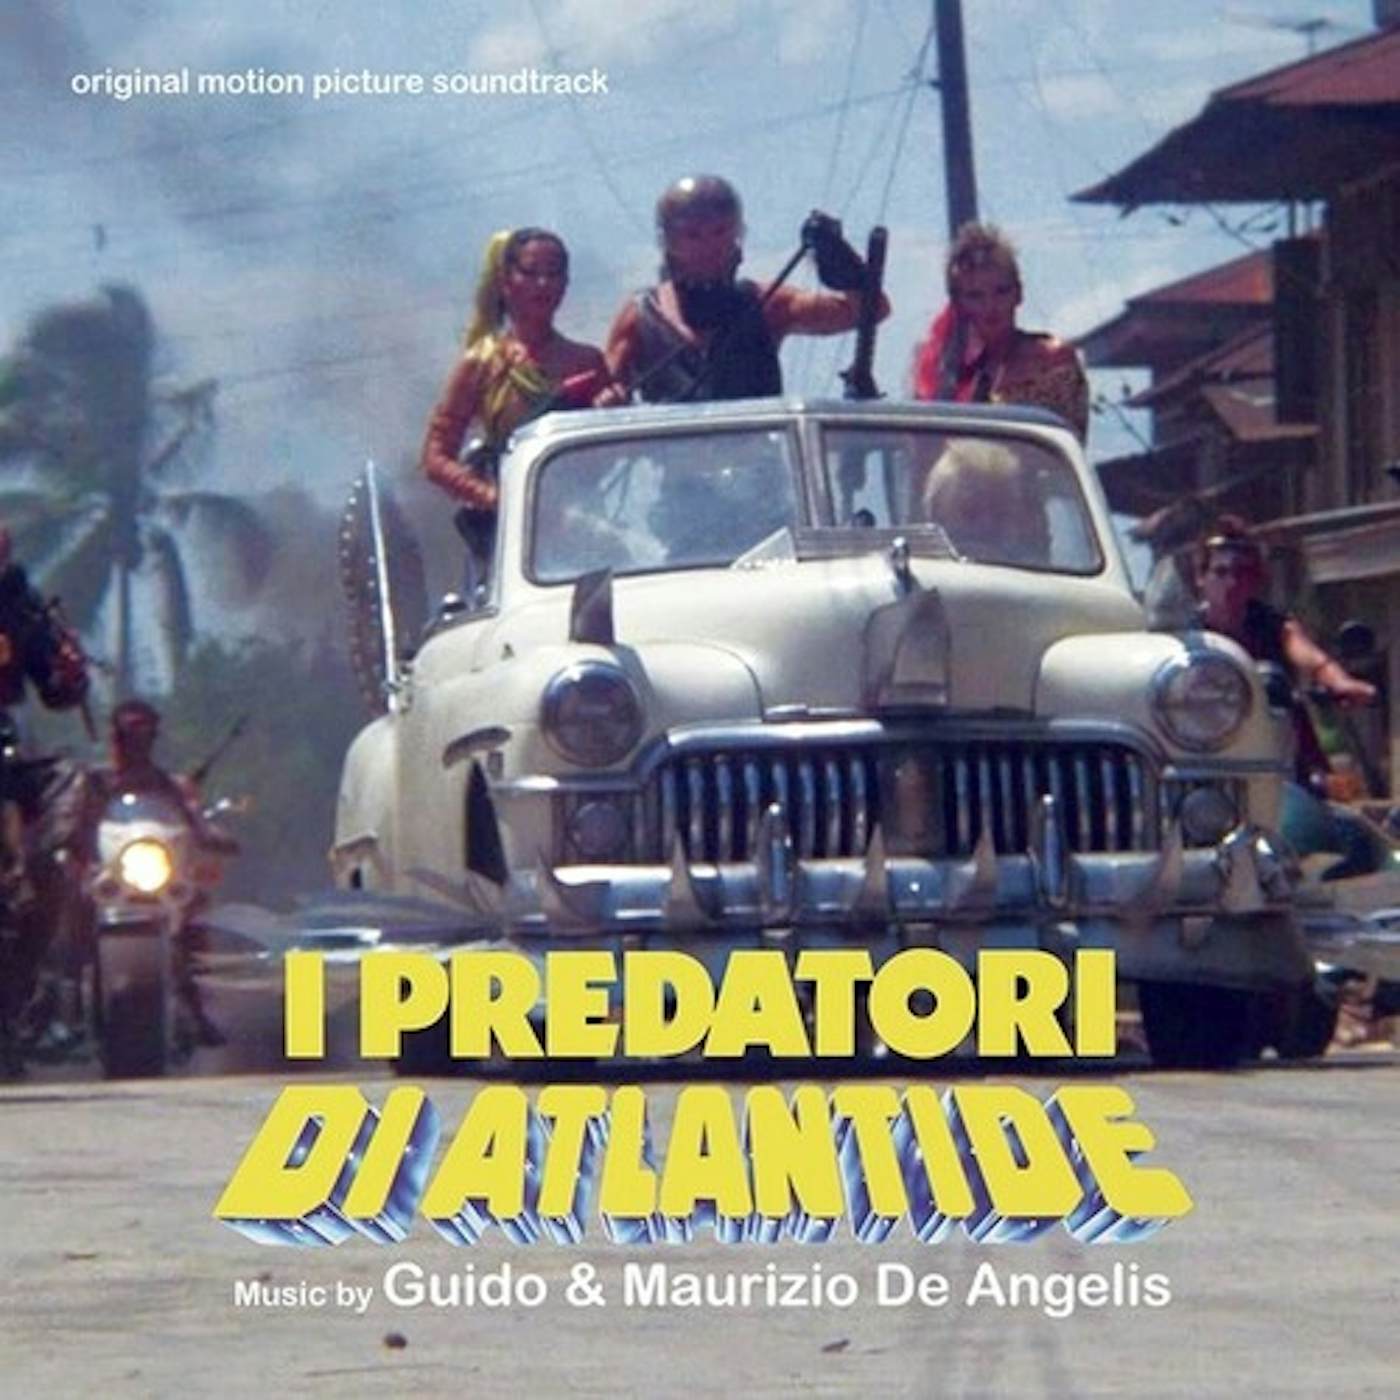 Guido & Maurizio De Angelis I PREDATORI DI ATLANTIDE - Original Soundtrack Vinyl Record